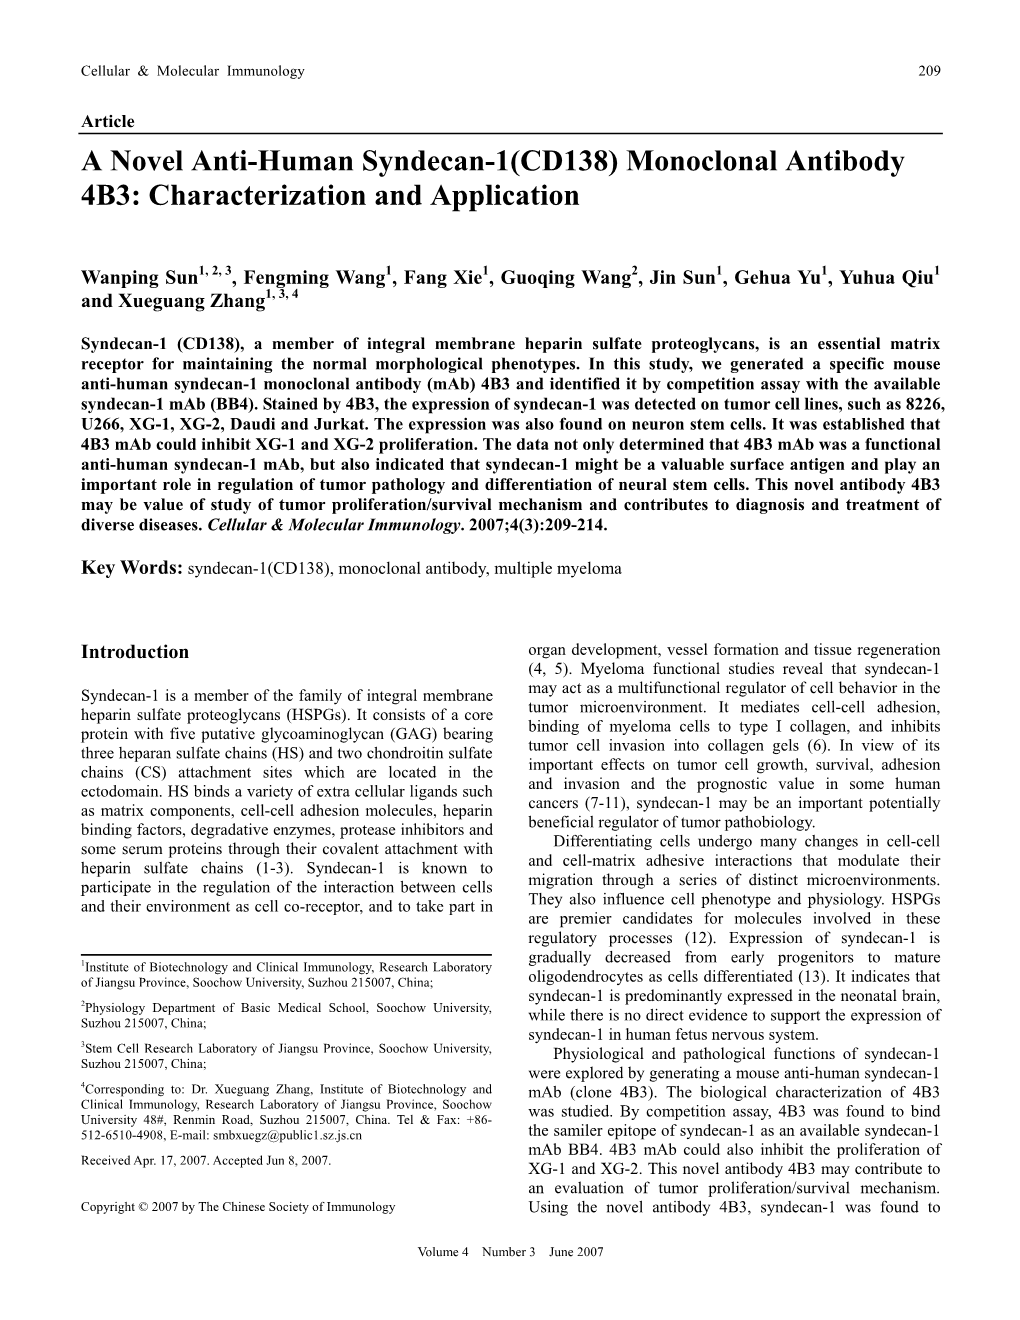 A Novel Anti-Human Syndecan-1(CD138) Monoclonal Antibody 4B3: Characterization and Application